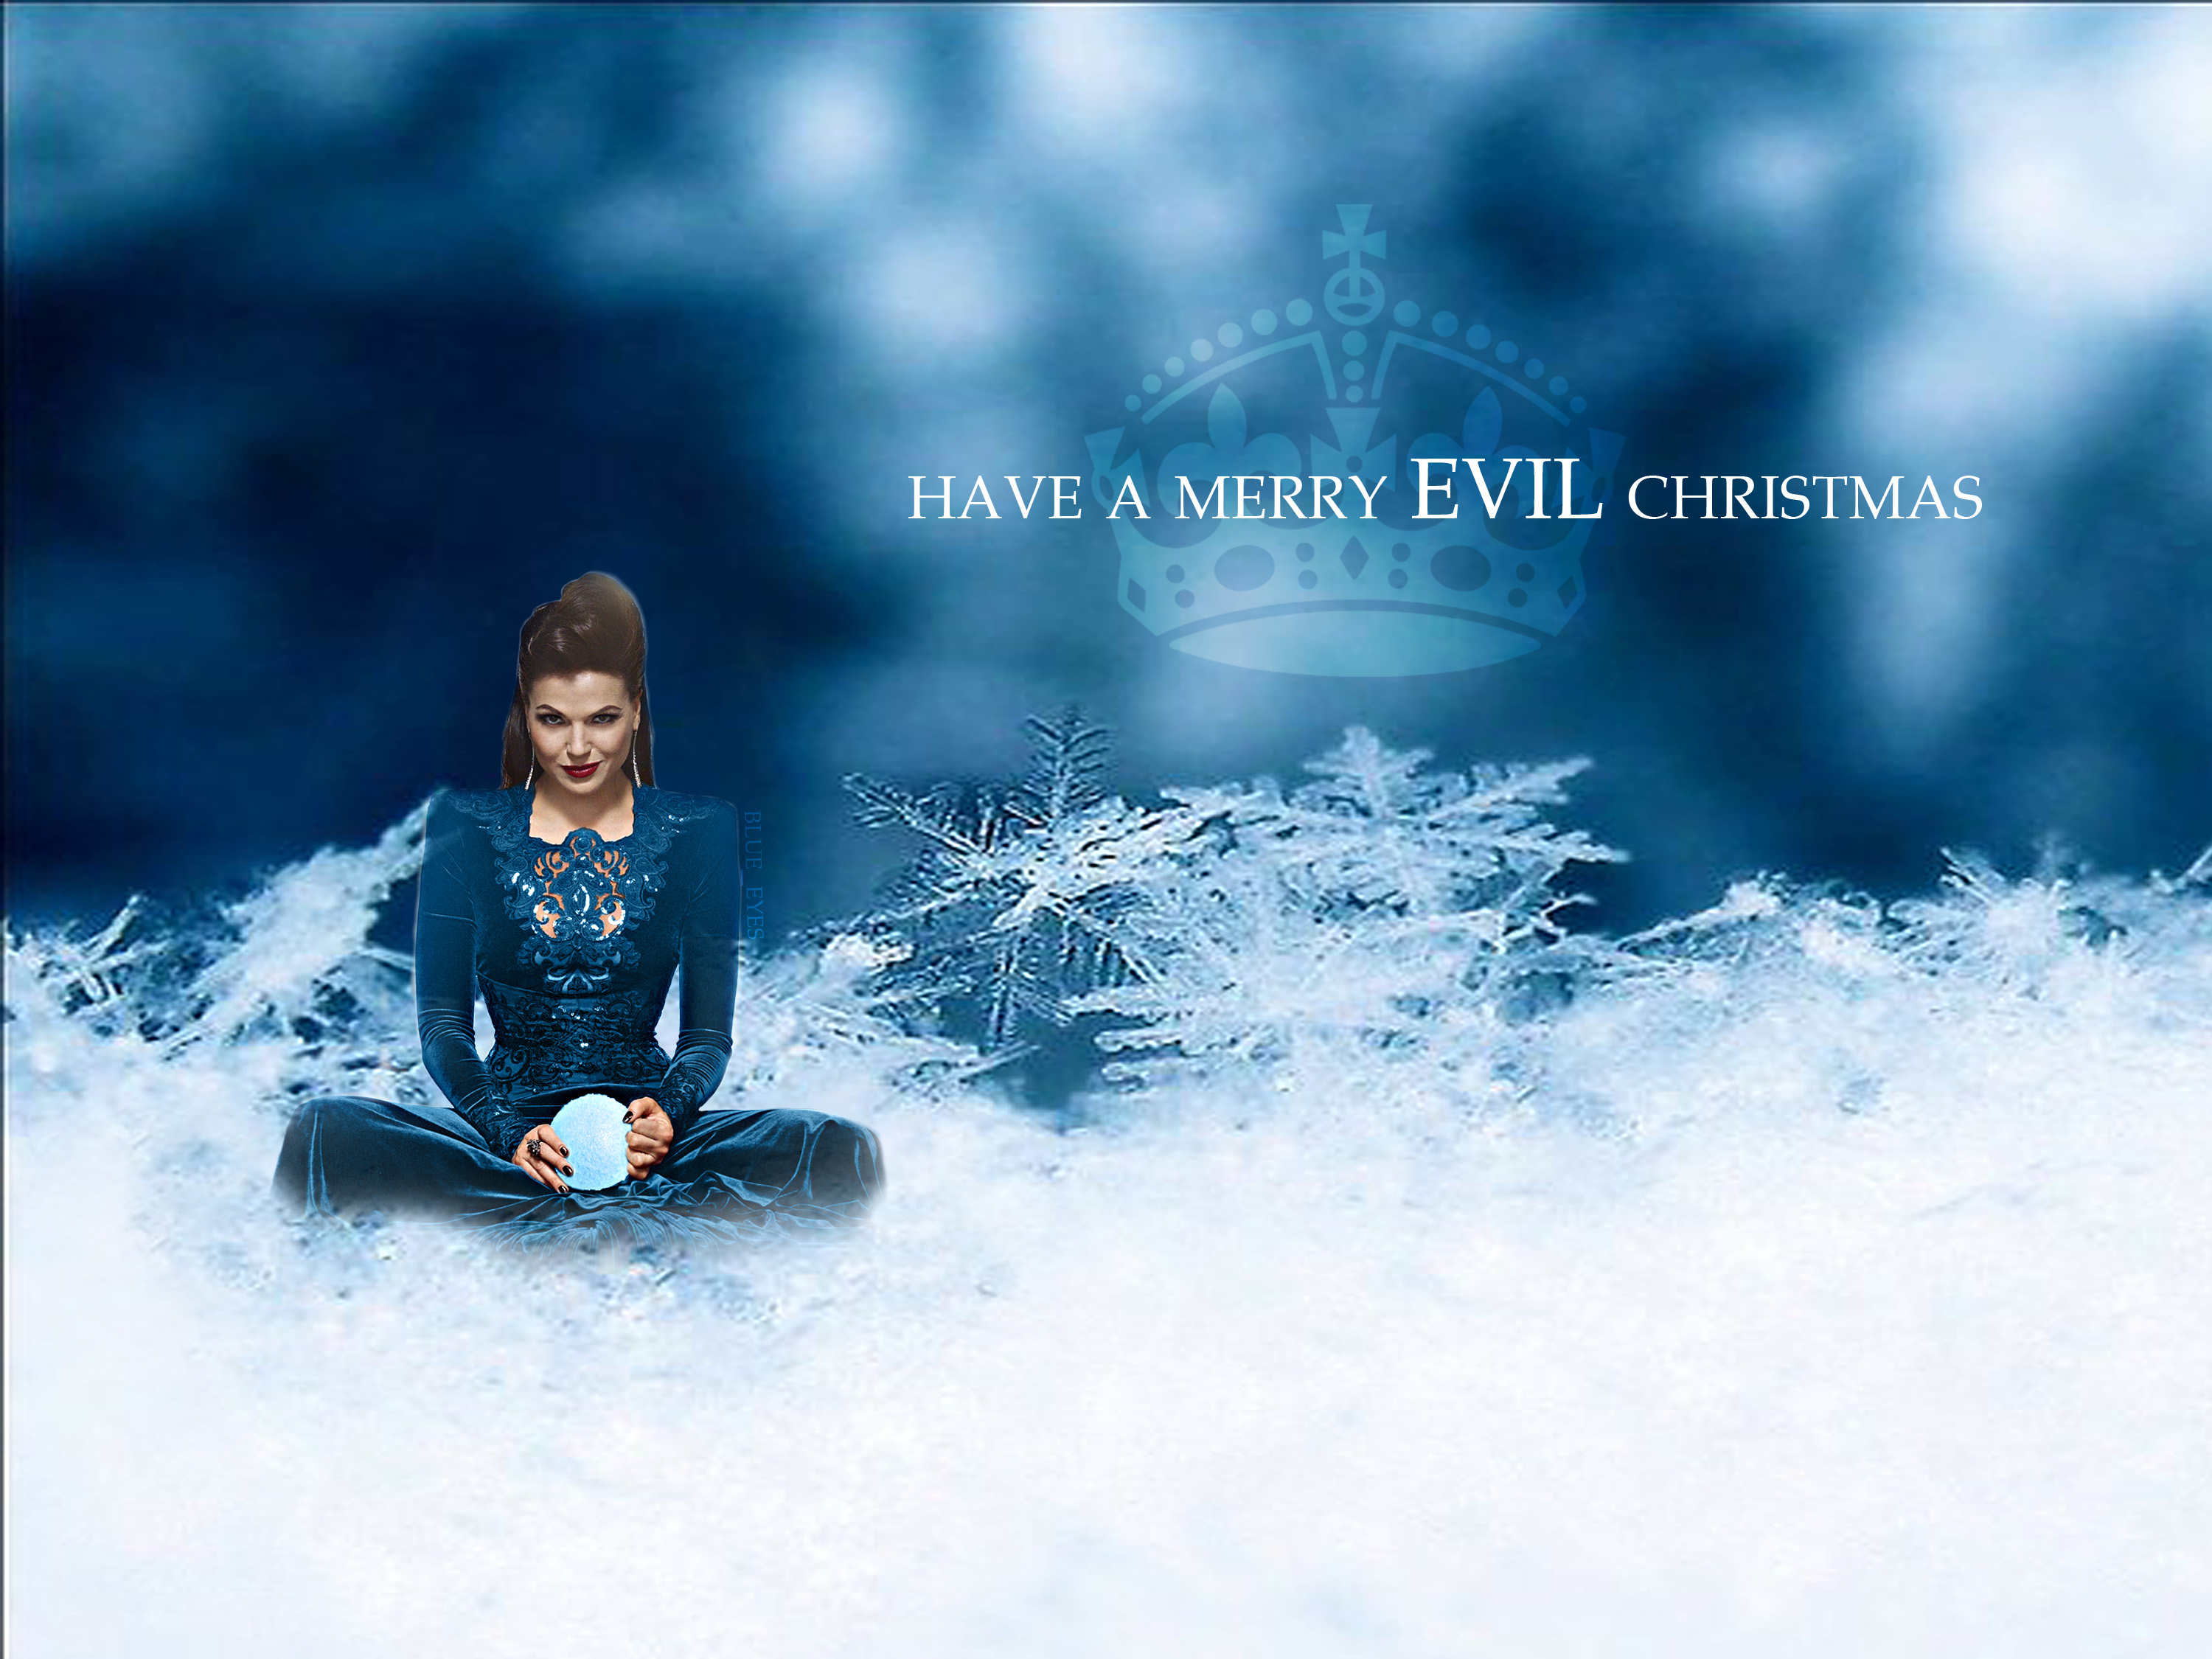 Evil Christmas Wallpaper Image Gallery